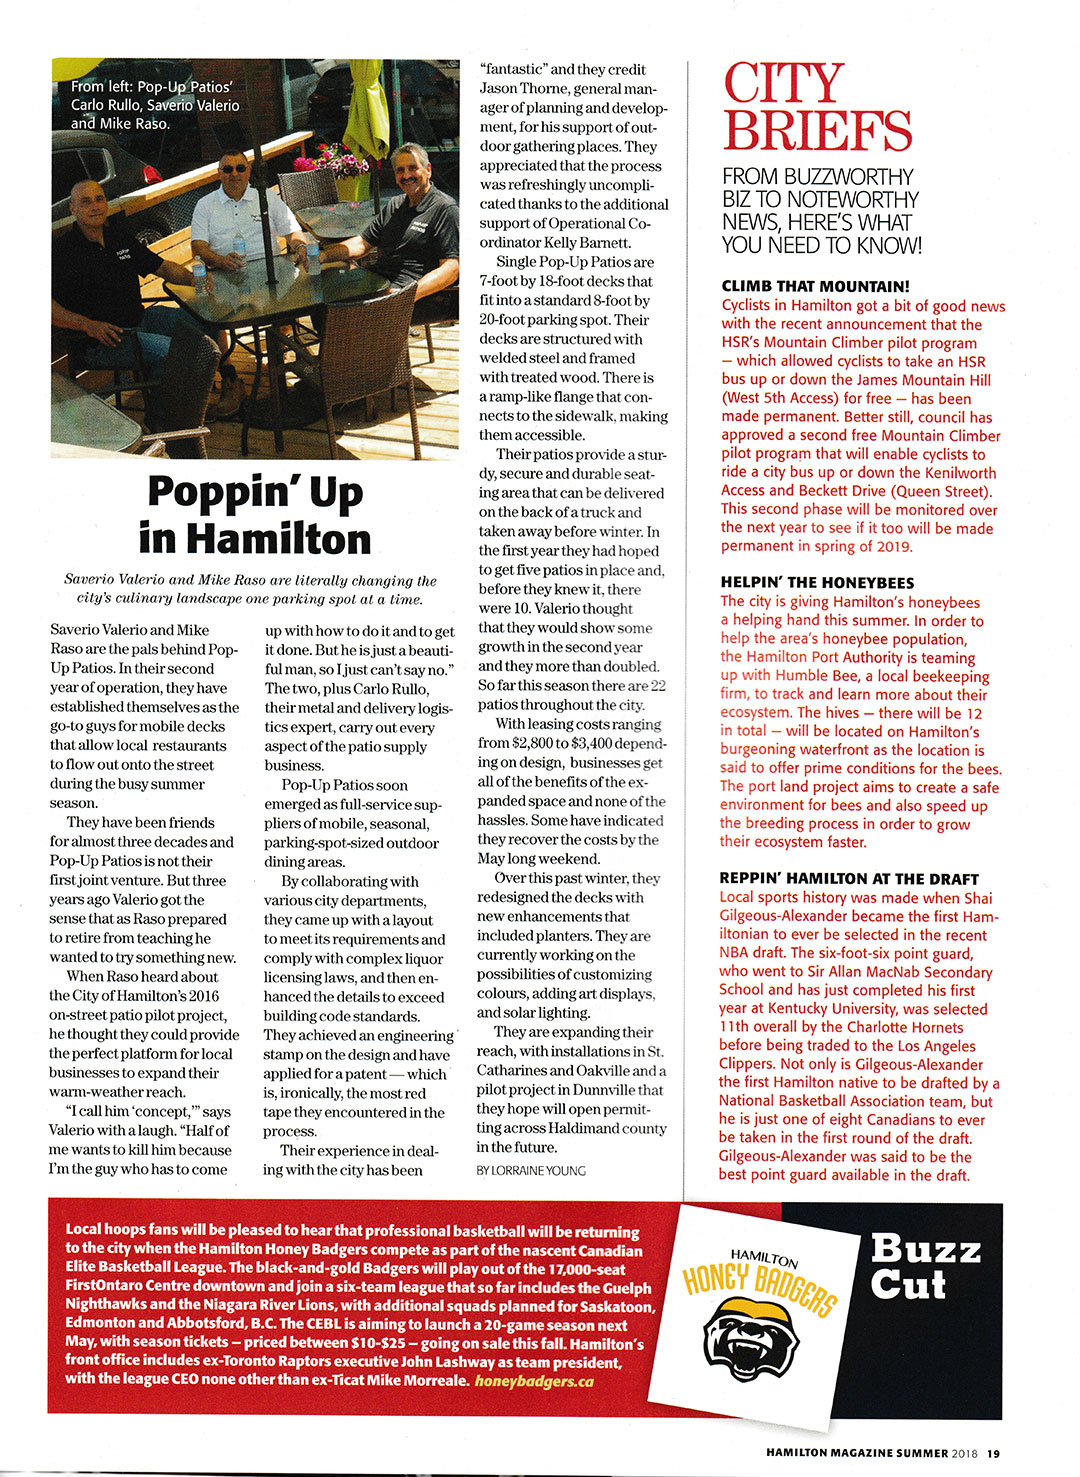 Hamilton Magazine Summer 2018